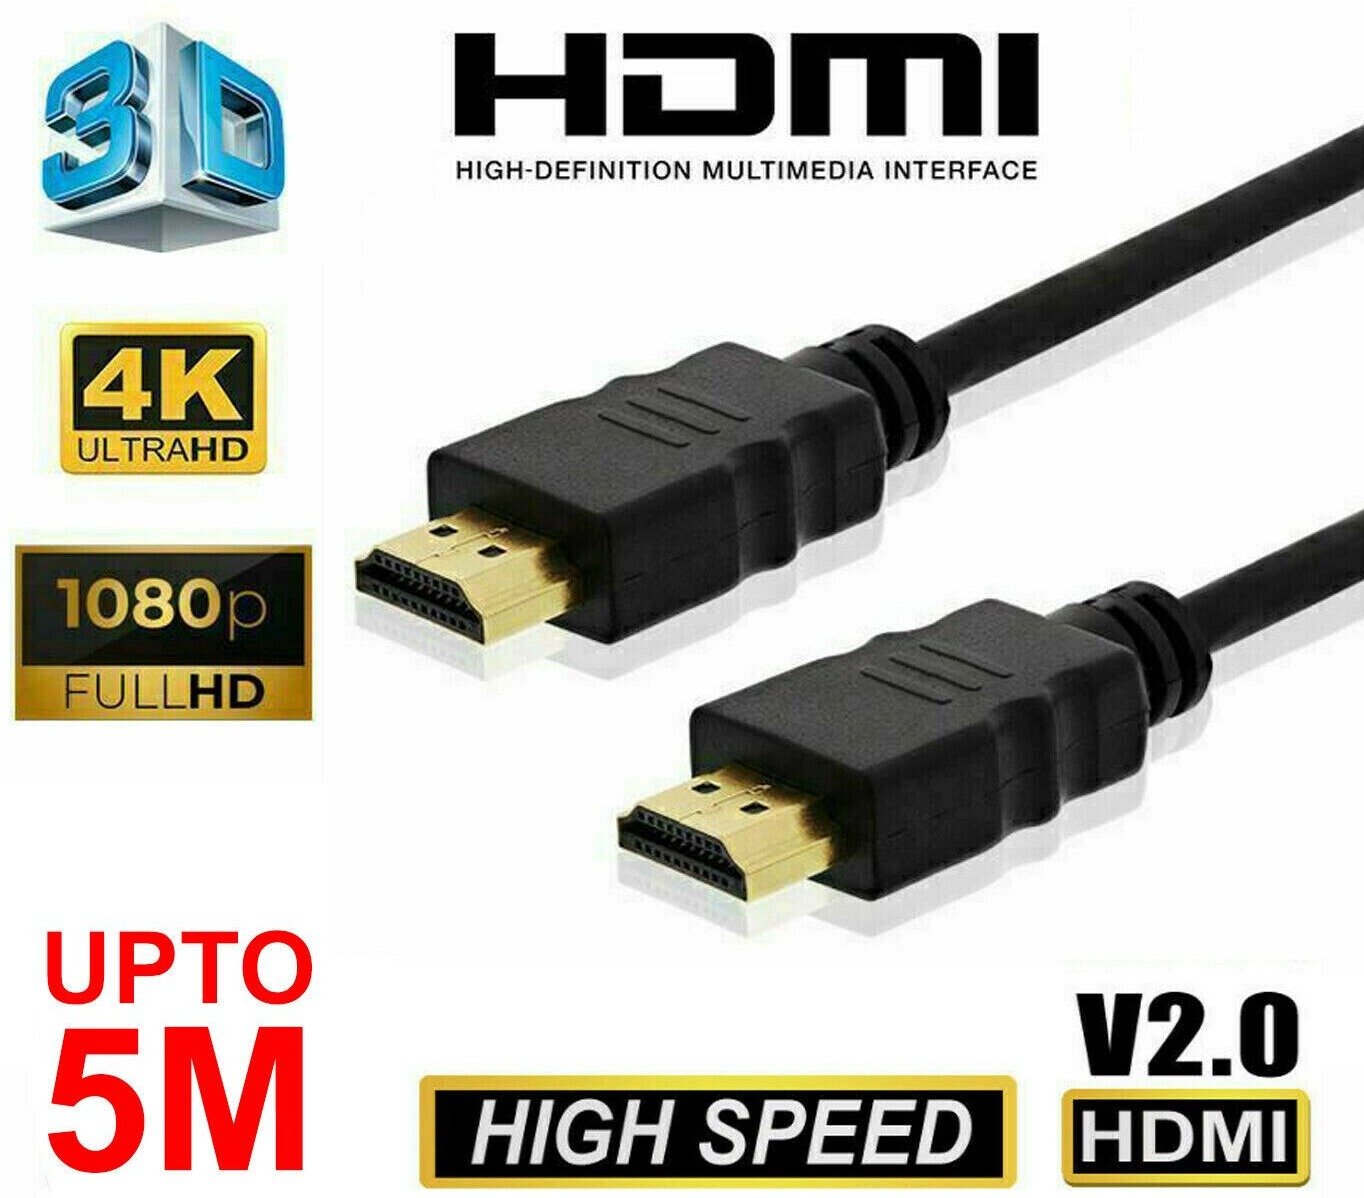 Cable Hdmi 2.0 4k Ultra Hd 3d 60hz 2160p Hdtv Premium – InTouch Perú